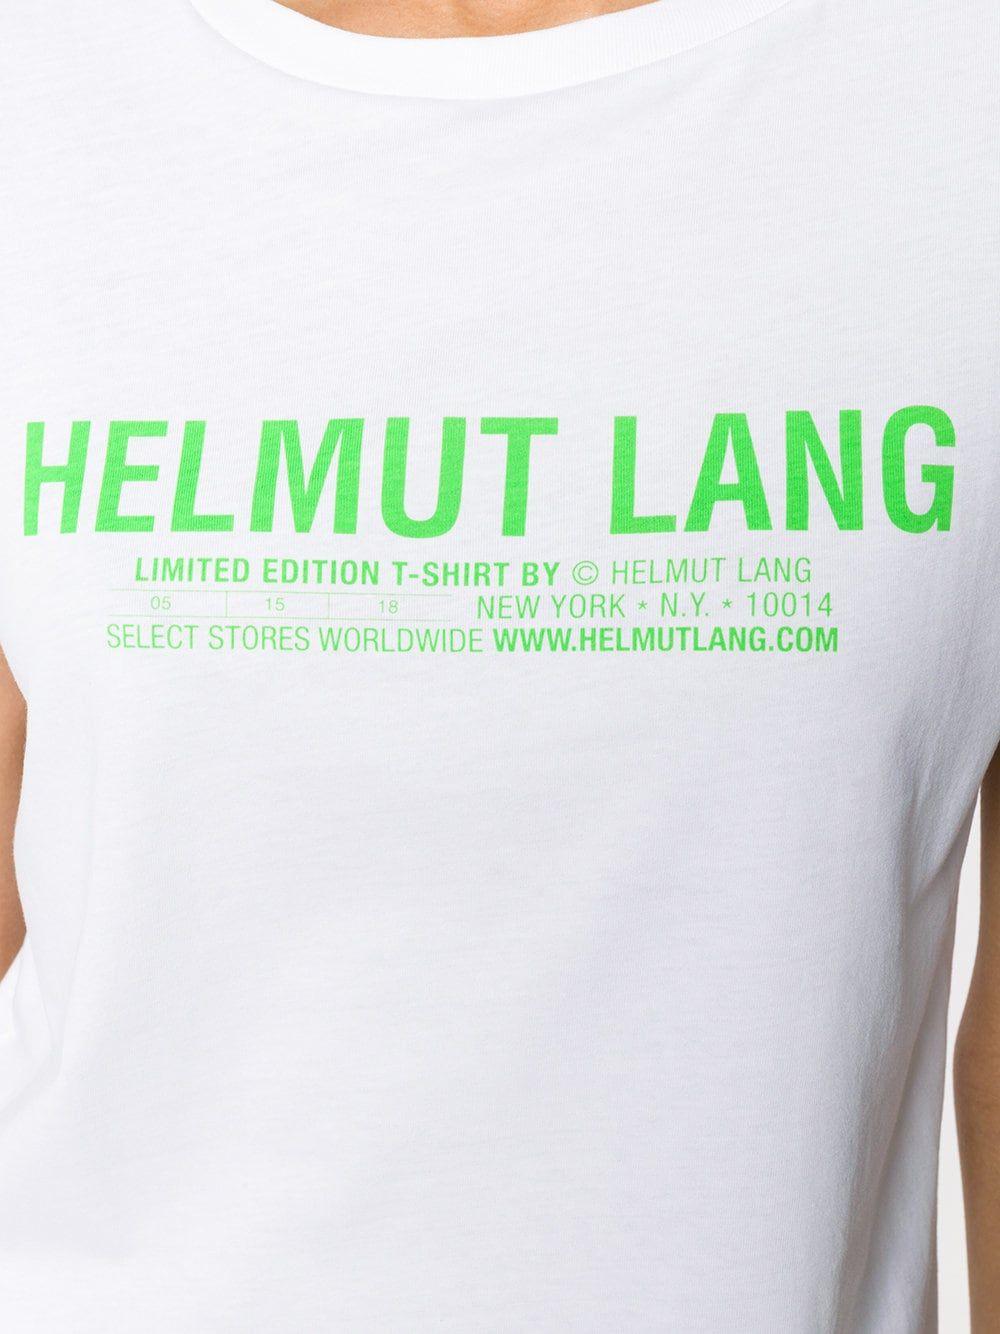 Lang Logo - Helmut Lang logo T-shirt X9S WHITE/POISON Fresh and elegant ONUAUQ